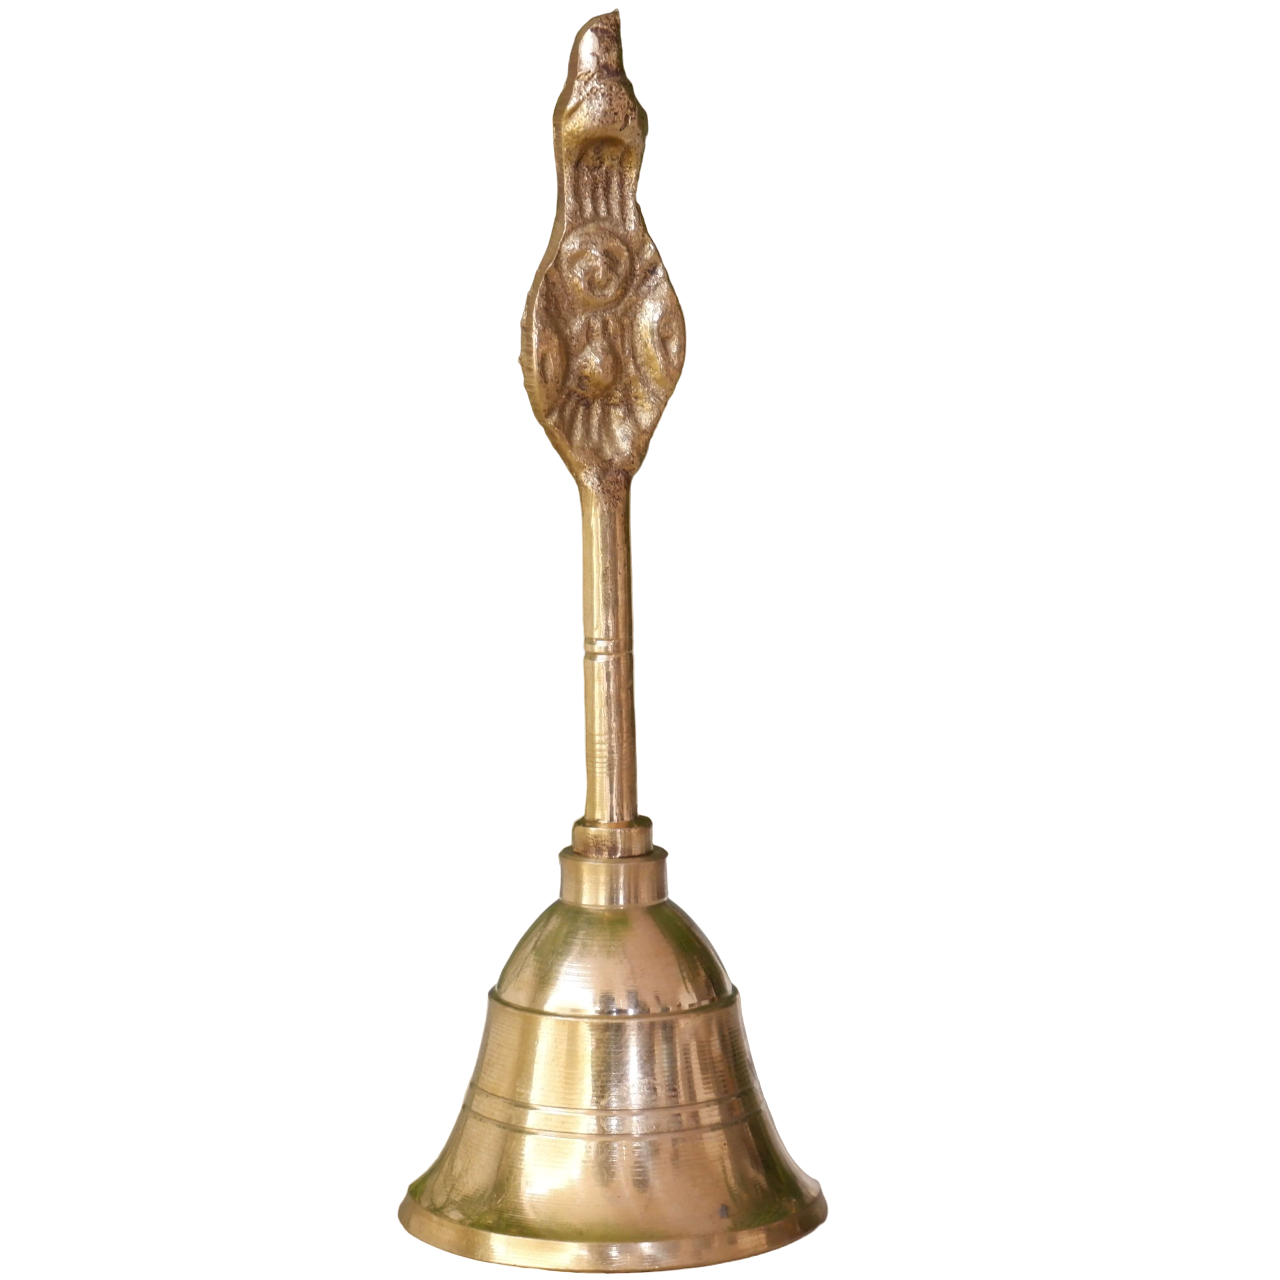 Puja Bell (Ghanti)